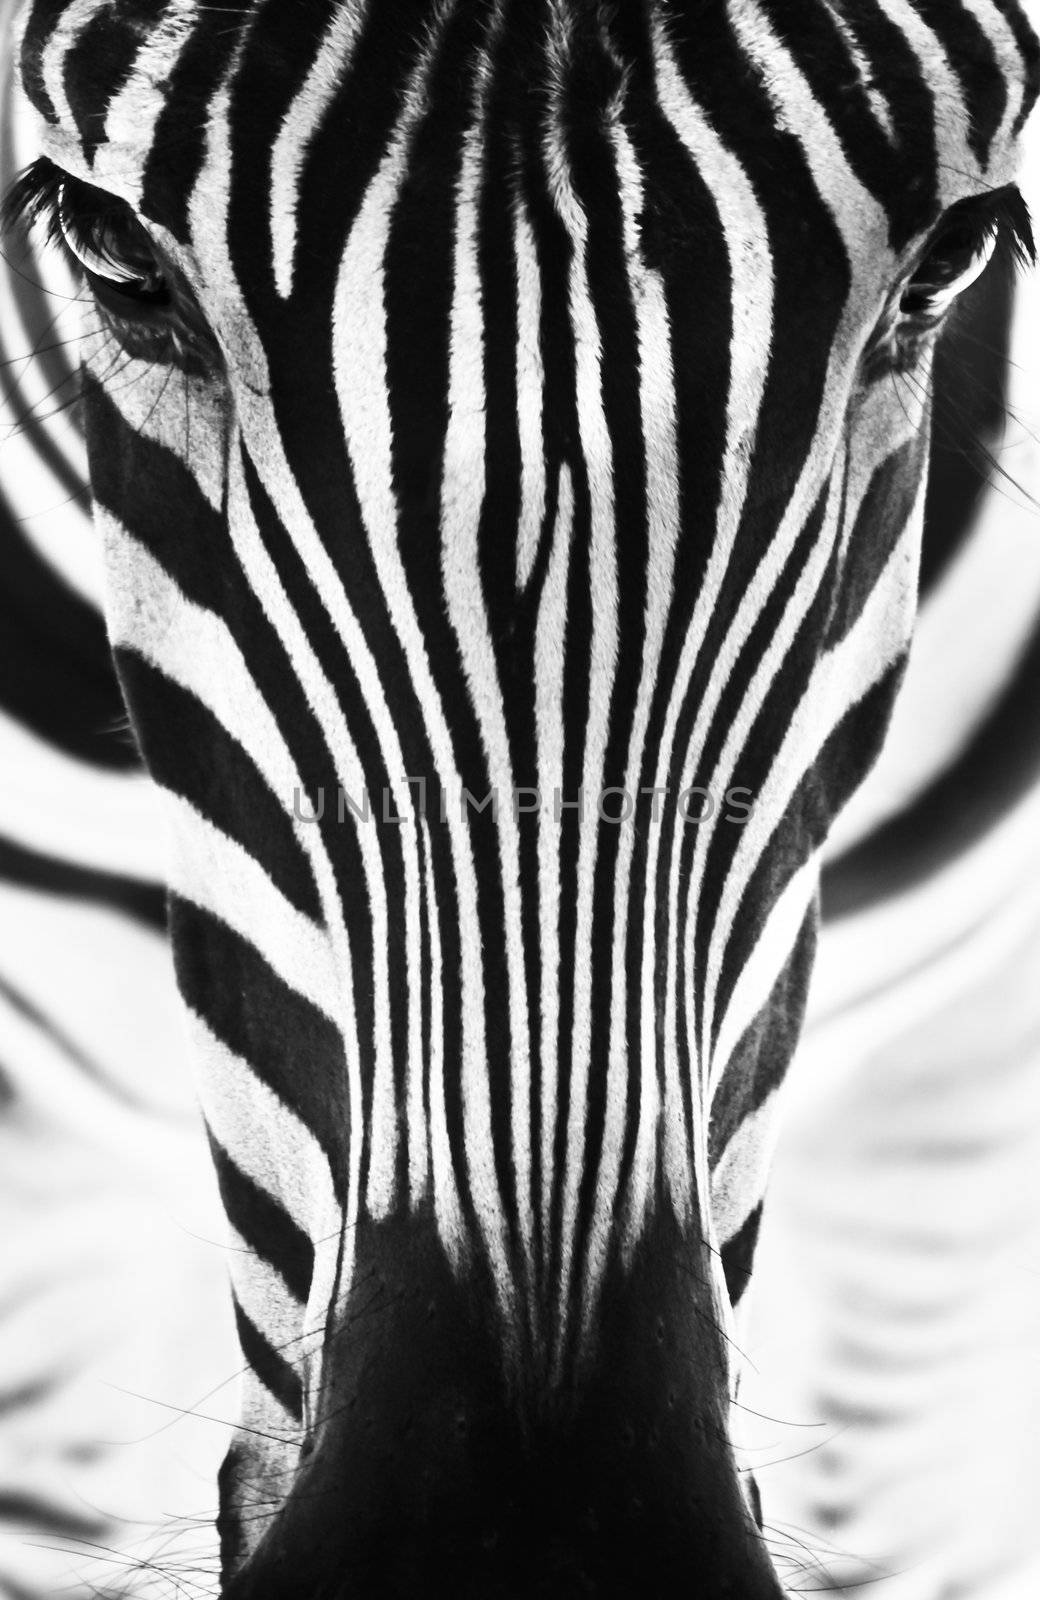 Black and white portrait of a zebra by kasto